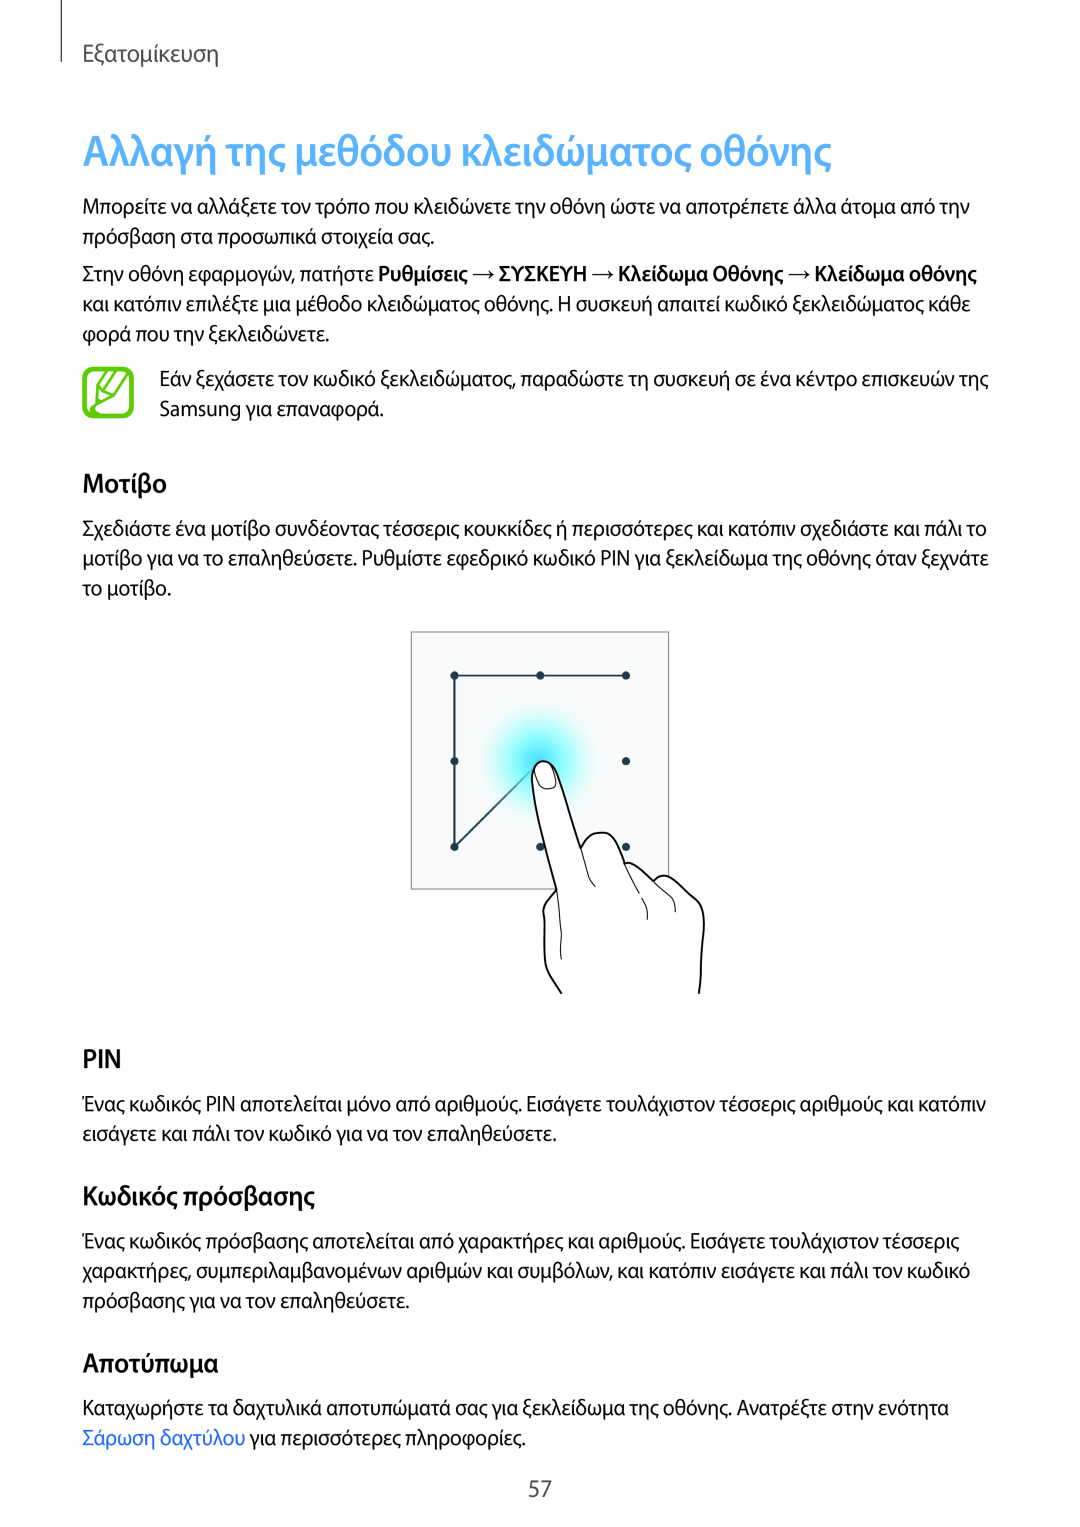 Samsung SM-T705NZWAEUR manual Αλλαγή της μεθόδου κλειδώματος οθόνης, Μοτίβο, Κωδικός πρόσβασης, Αποτύπωμα, Εξατομίκευση 